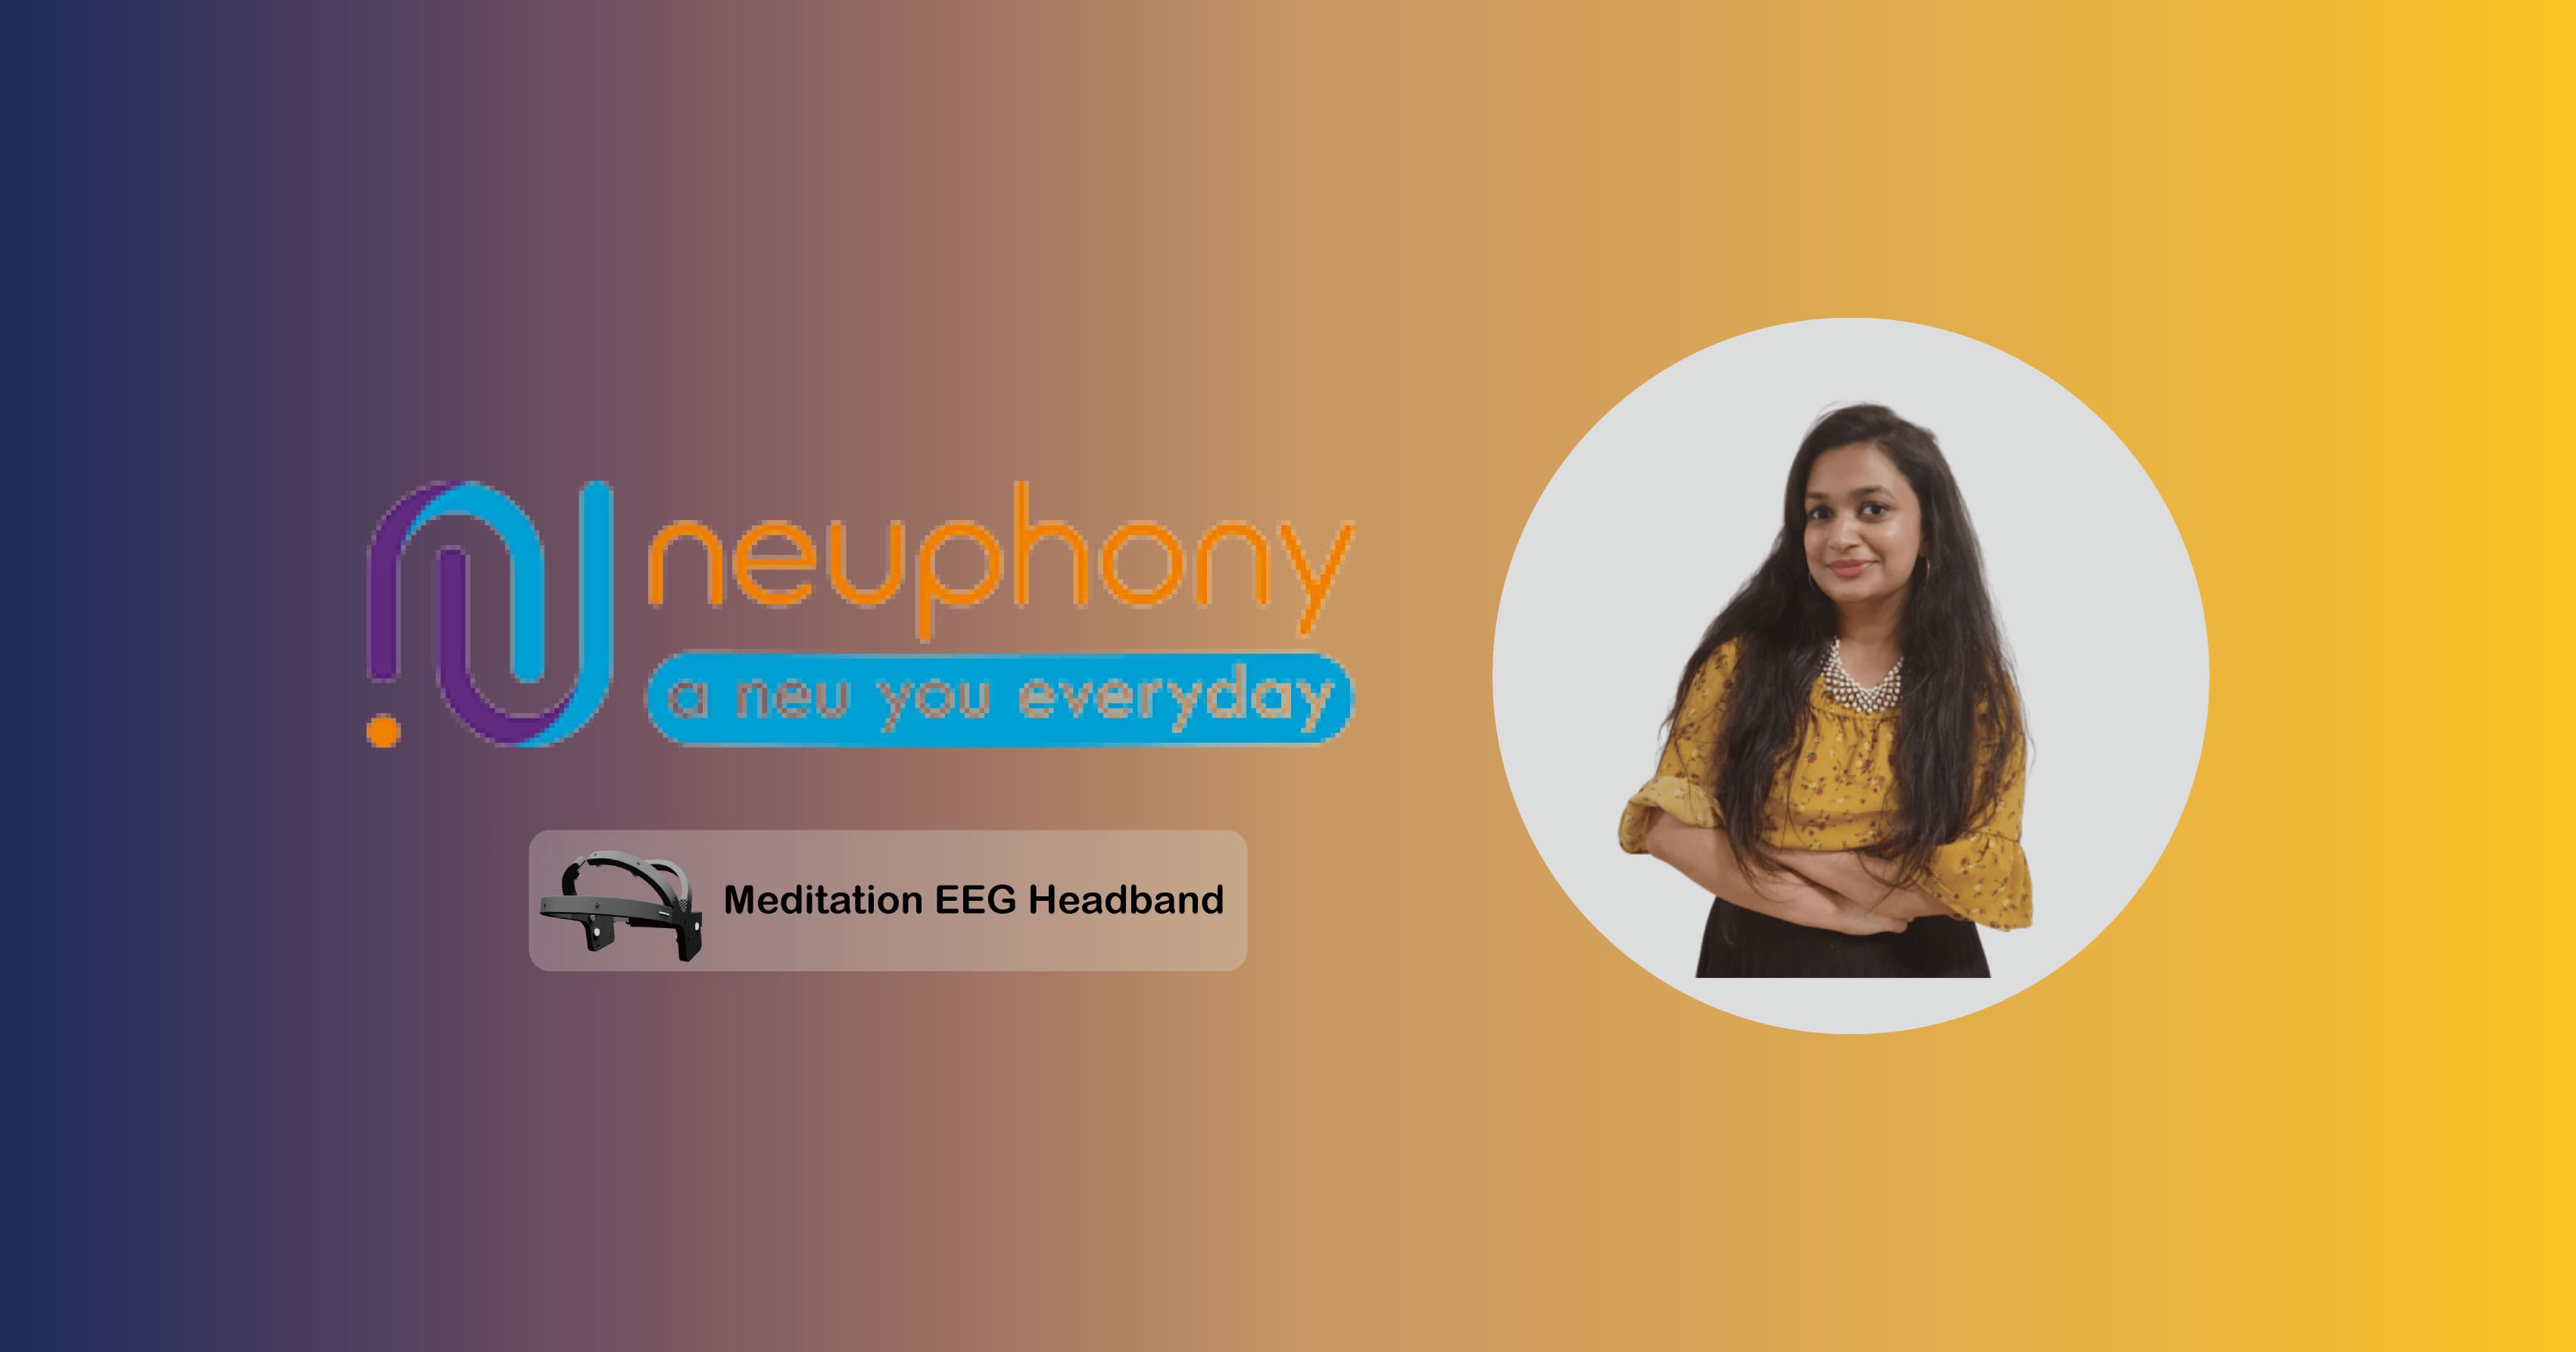 NeurotechJP banner High accurate and versatile. Meditation headband "Neuphony" | Ria Rustagi